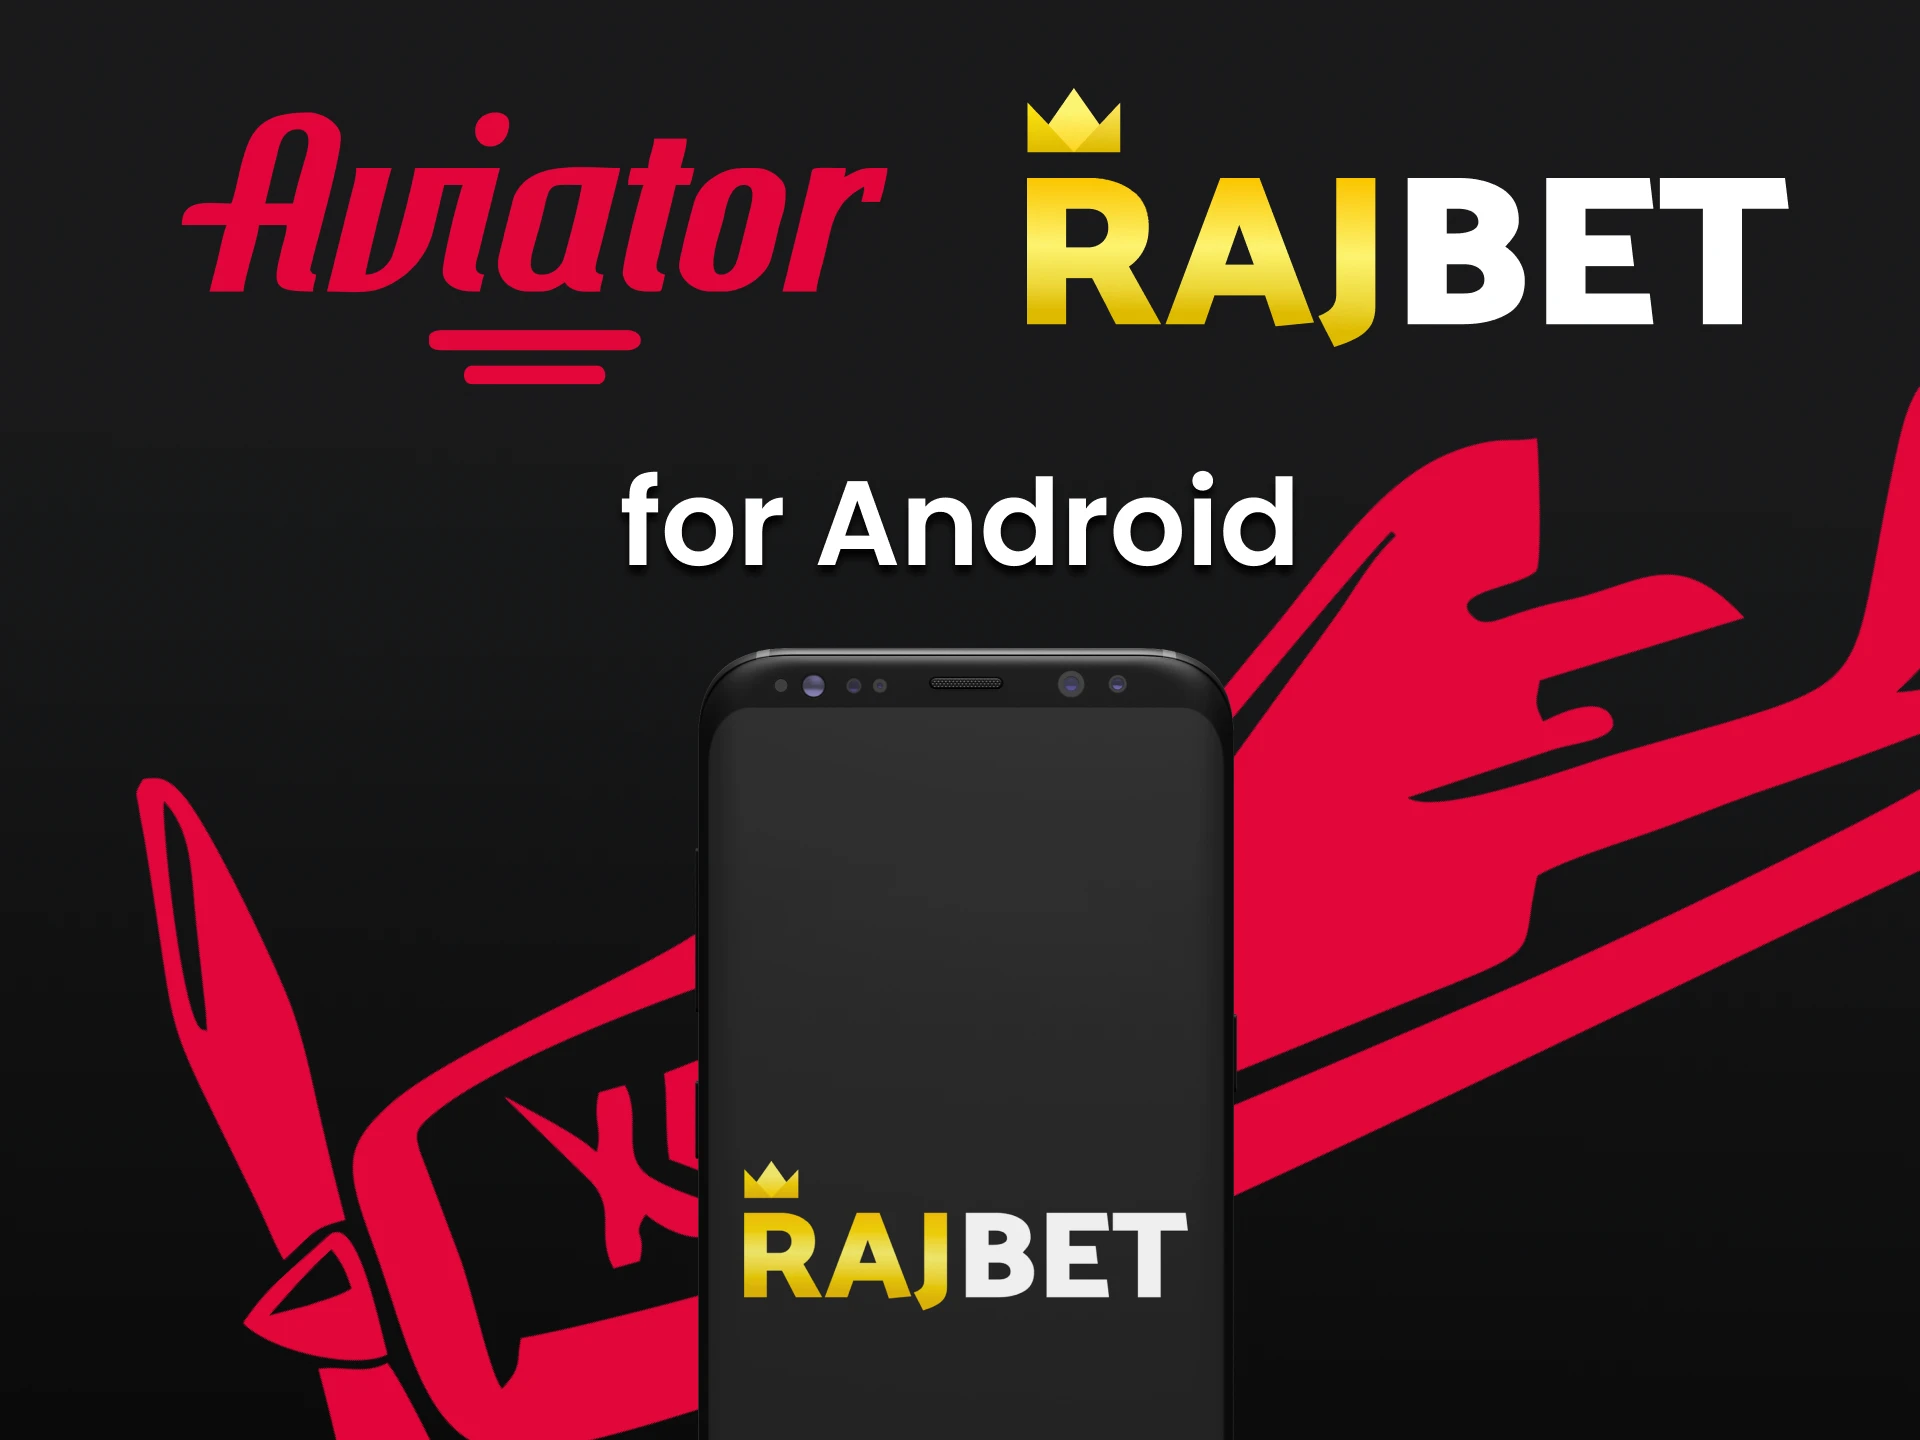 Use o aplicativo Android Rajbet para jogar Aviator.